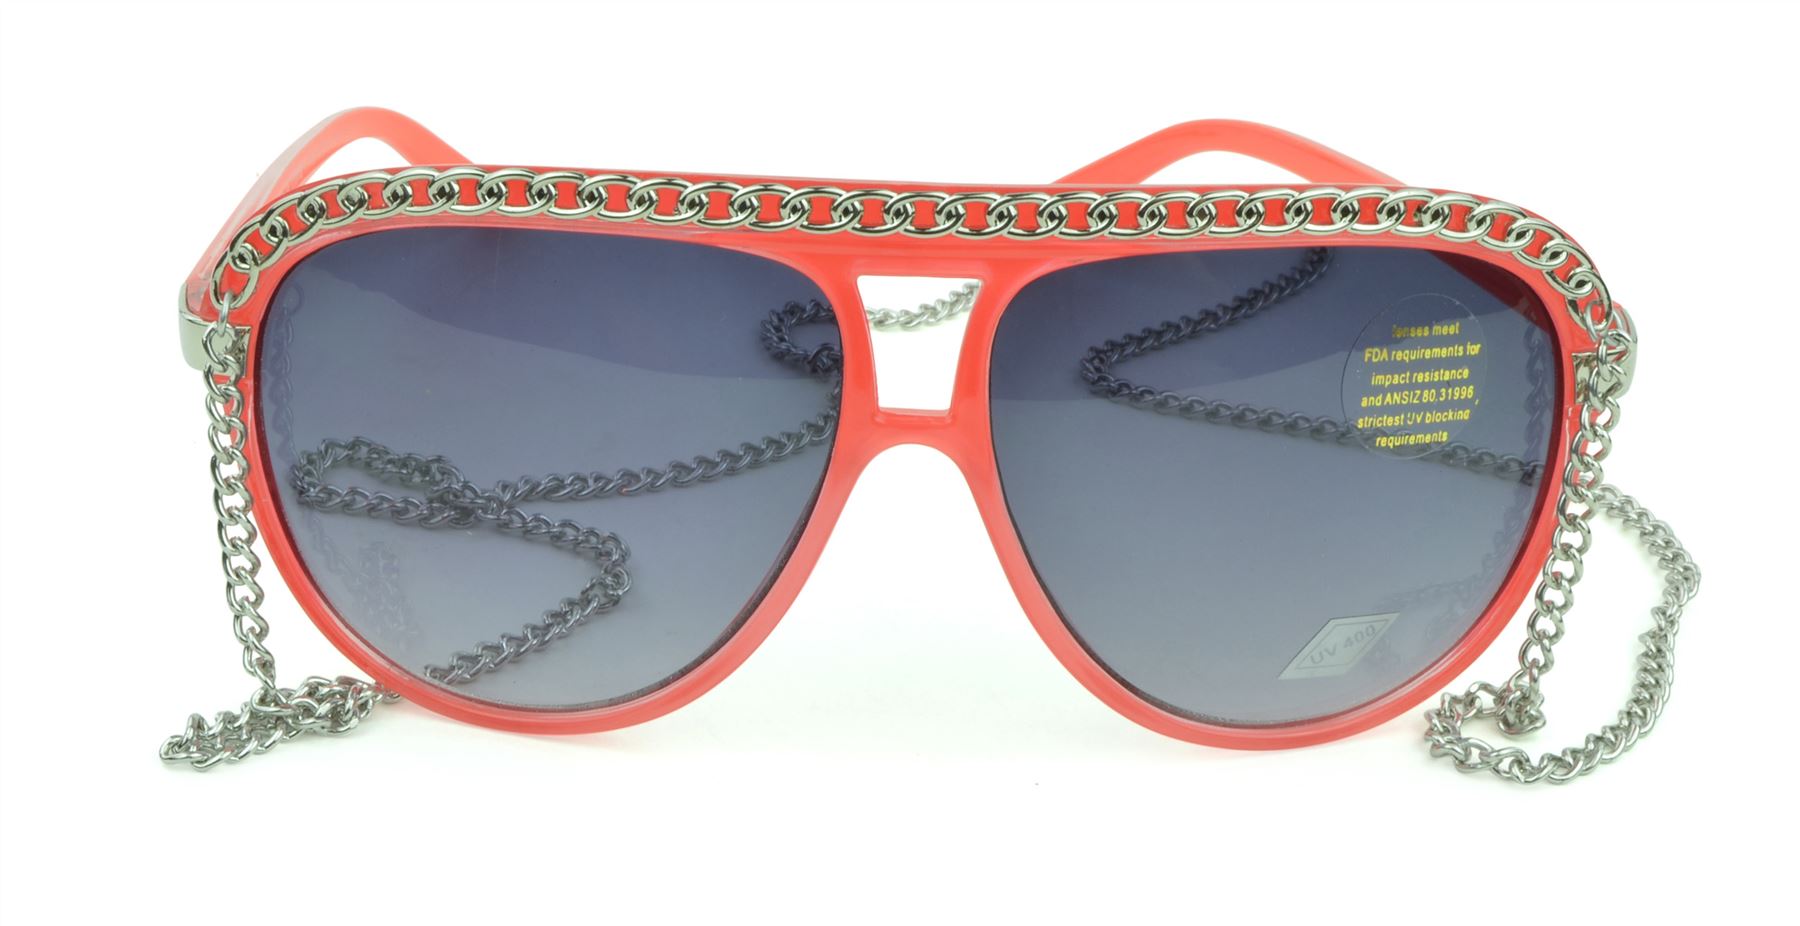 Belle Donne - Women's Hot Celebrity Style Chain Fashion Sunglasses - Watermelon One Size